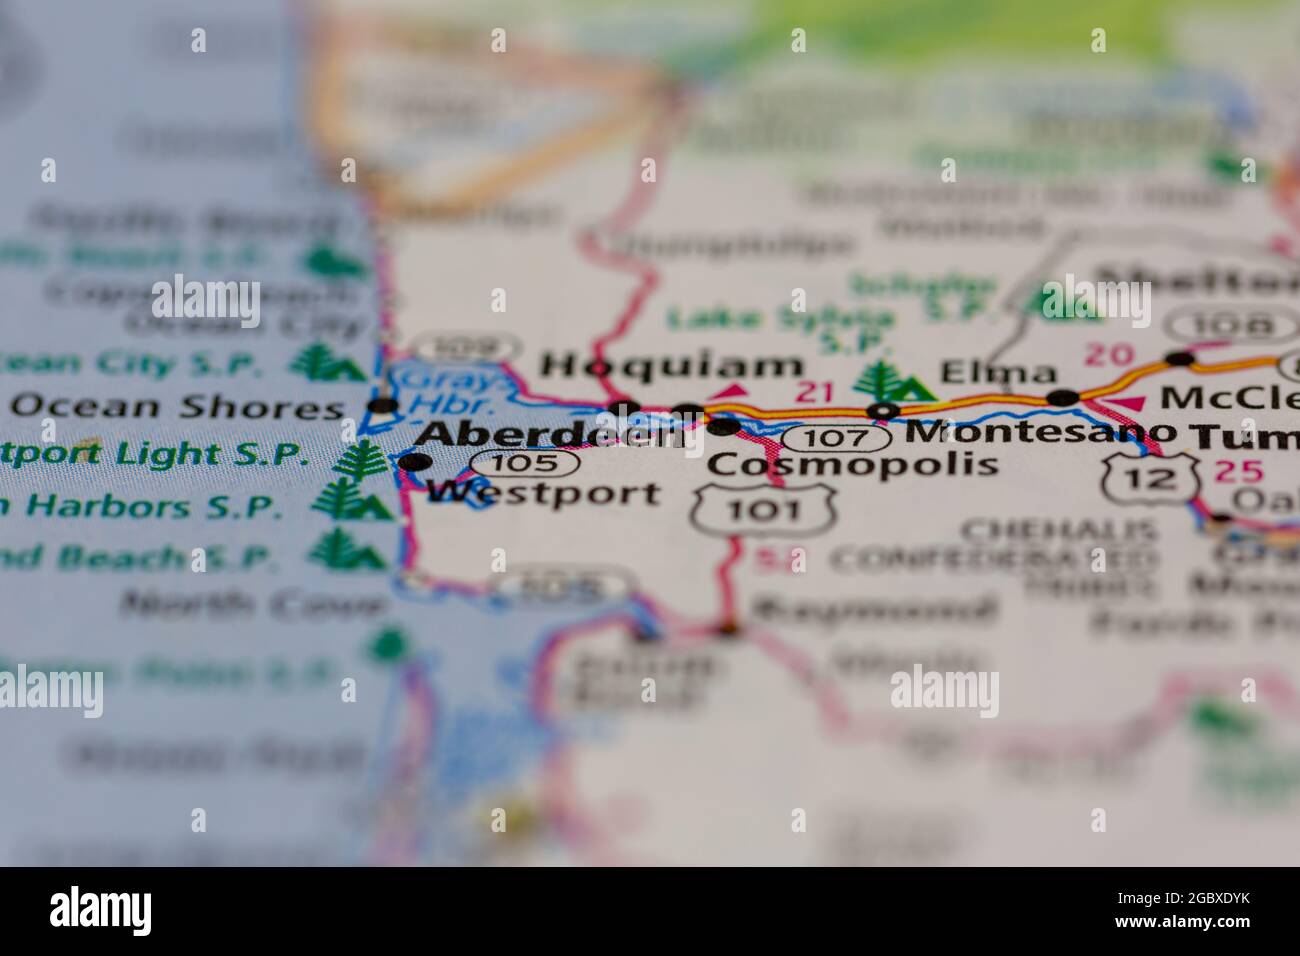 Aberdeen Washington state USA su una mappa stradale o su una mappa geografica Foto Stock